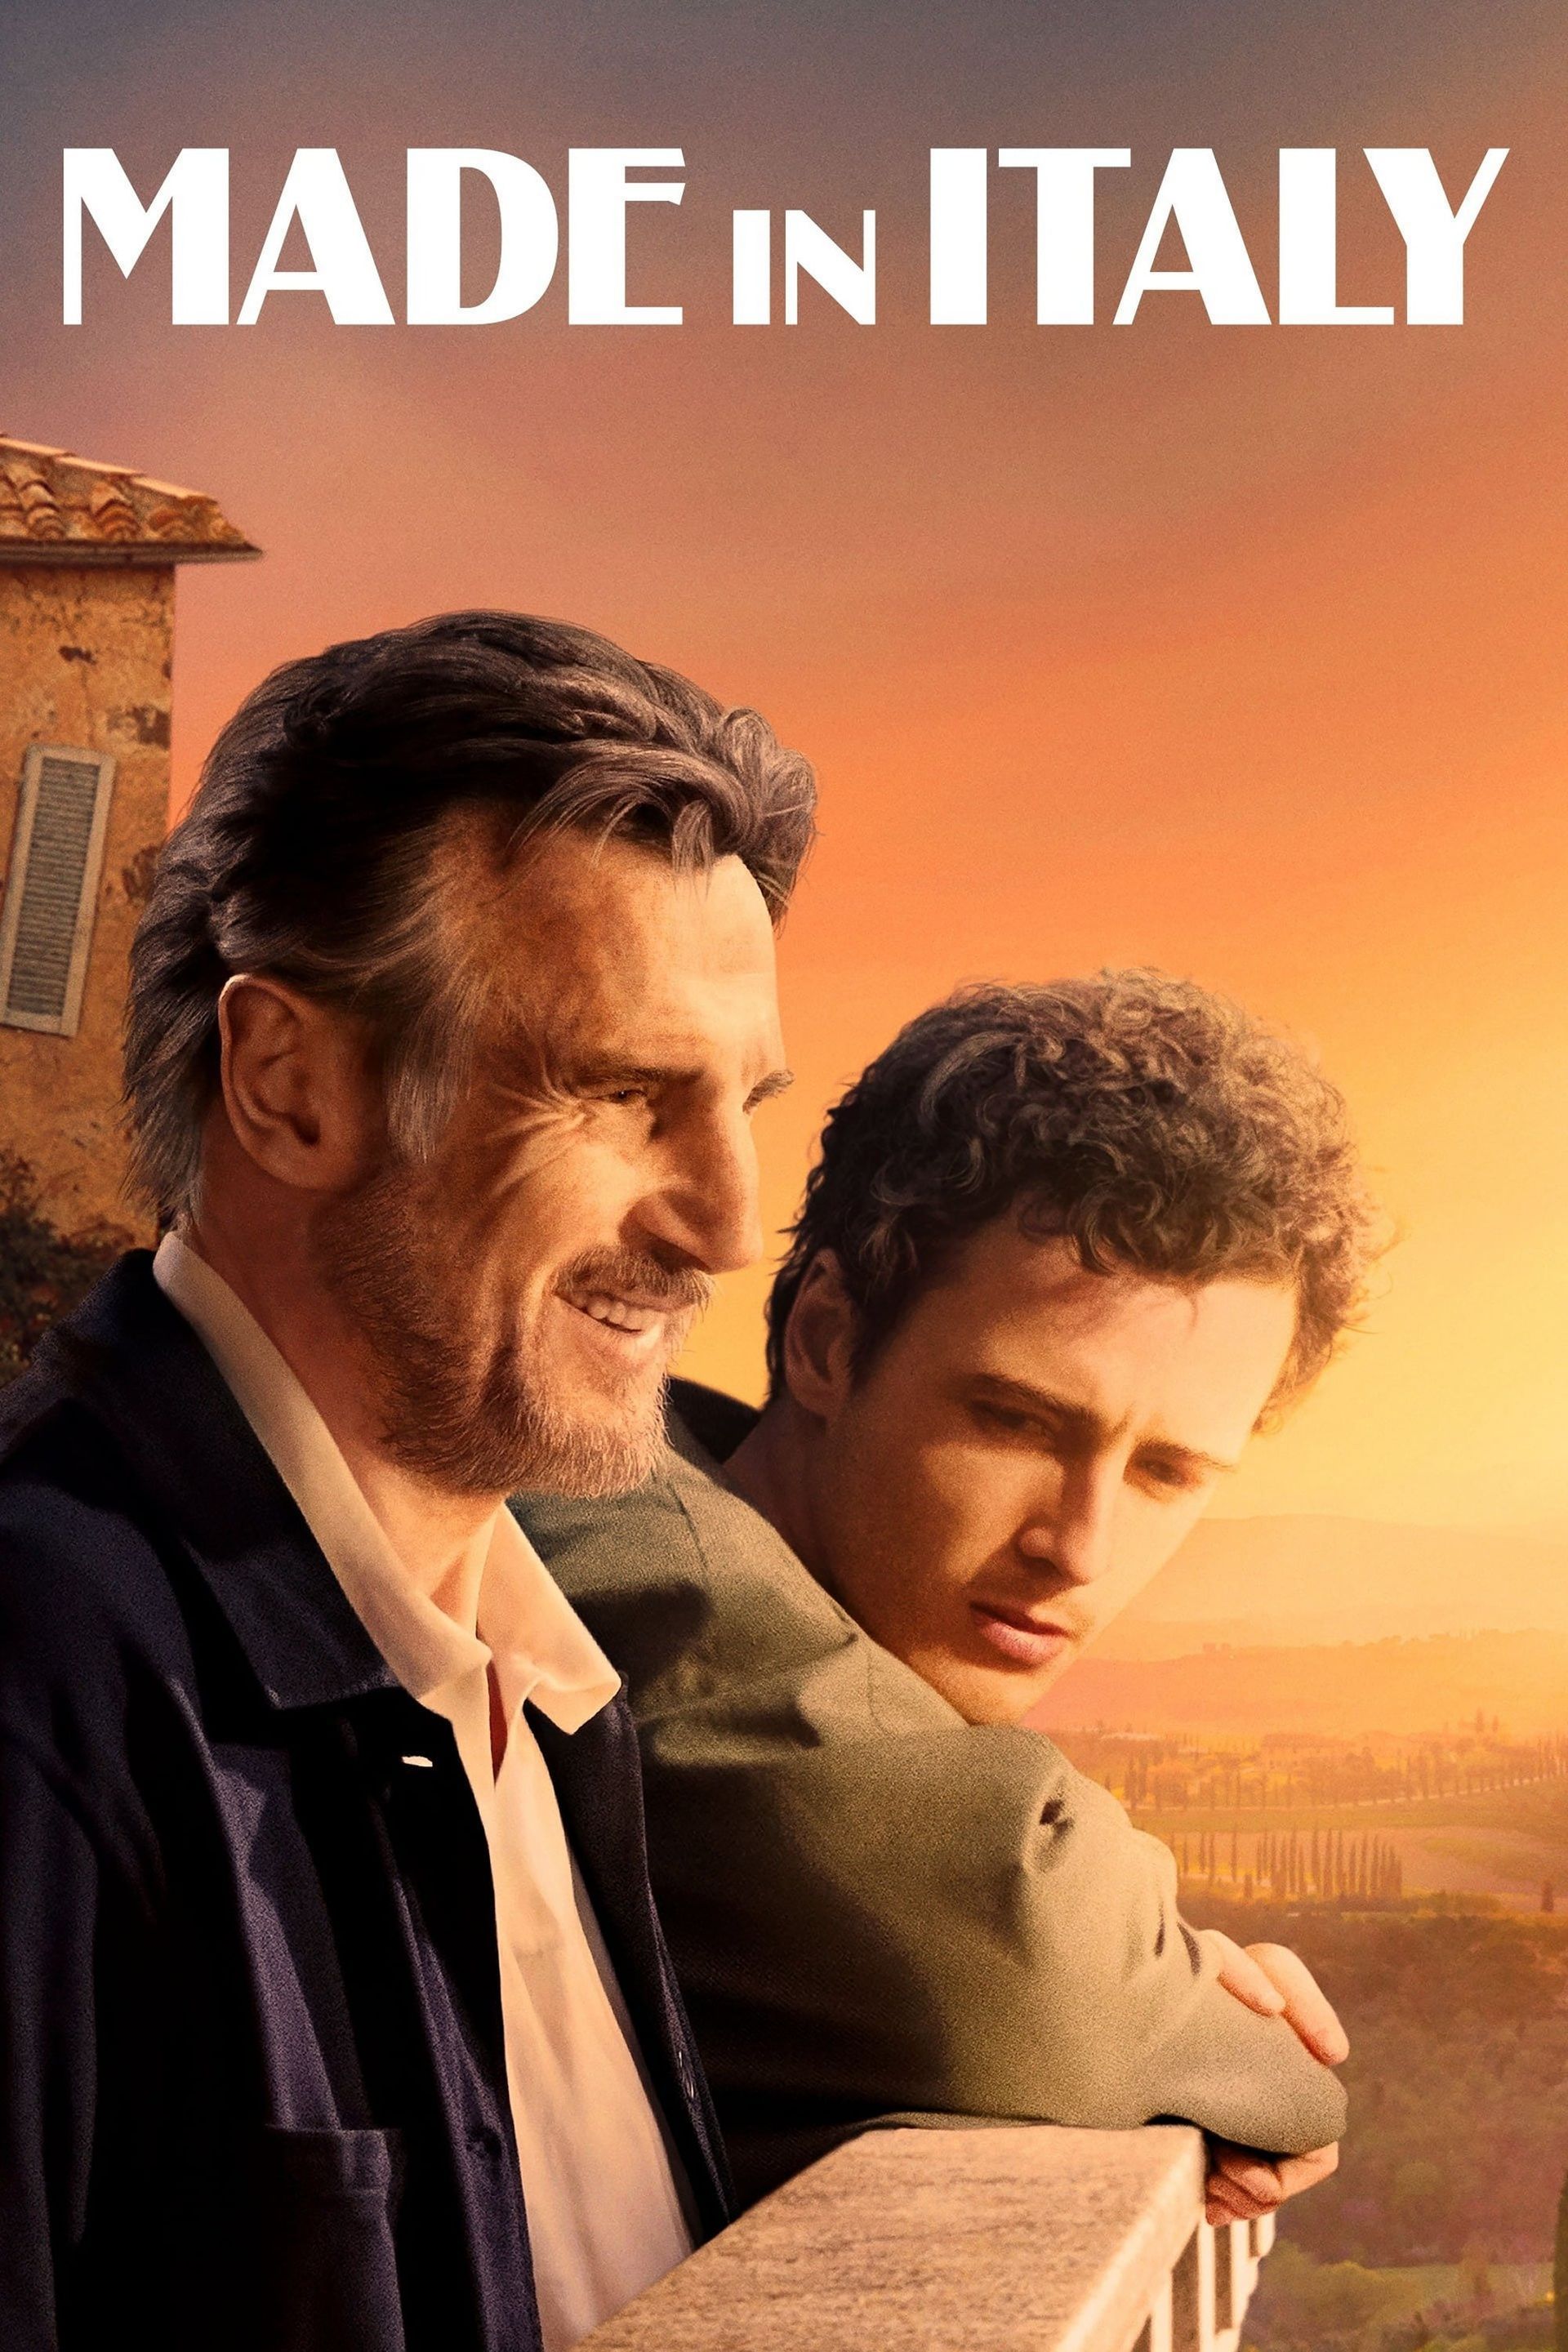 Watch Made in Italy (2020) Full Movie Online - Plex